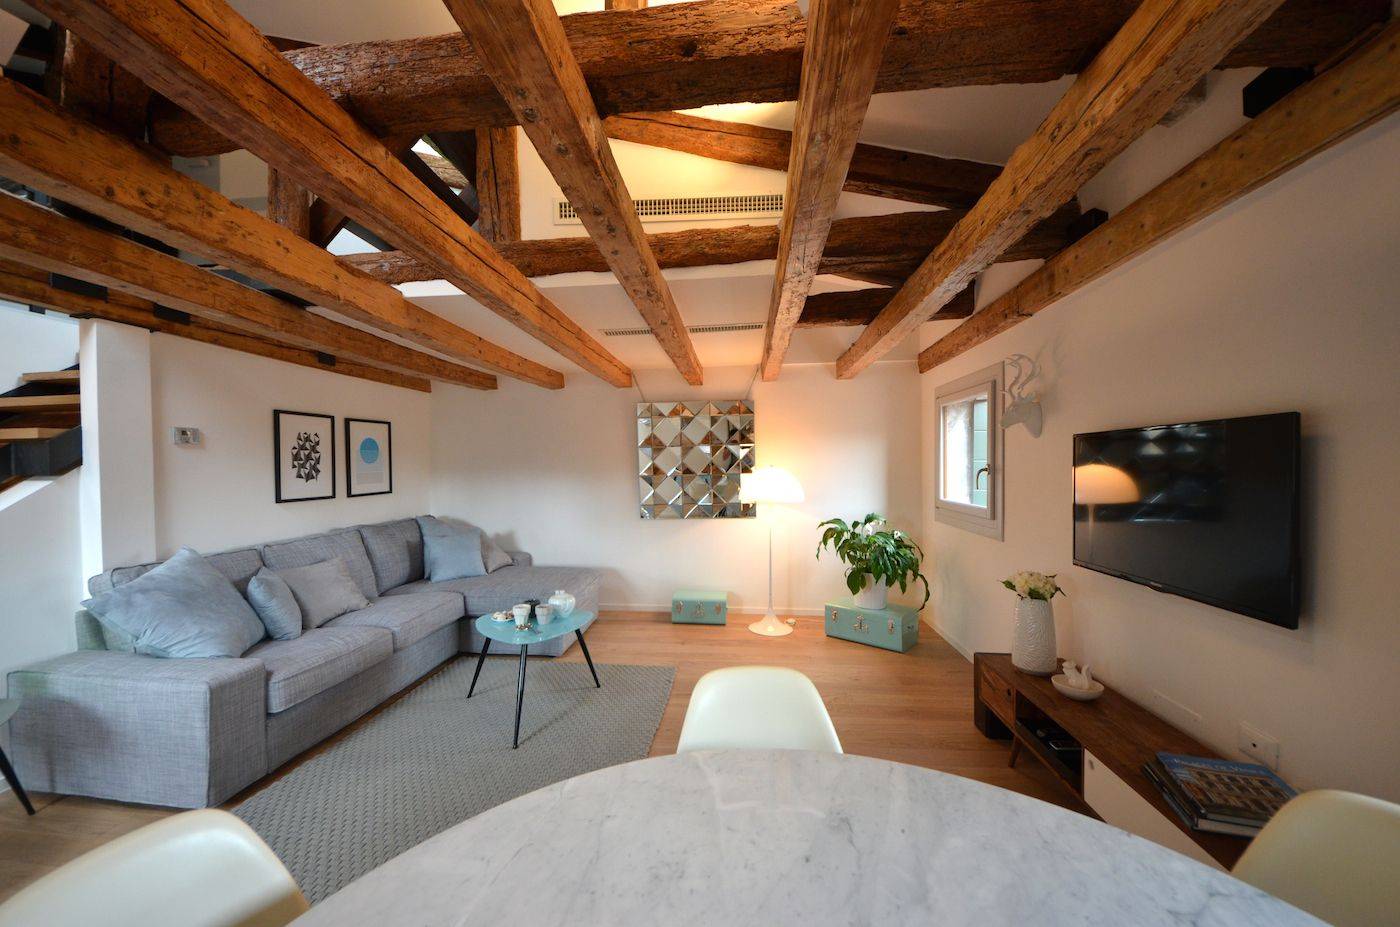 the cozy living room of the Sagredo apartment